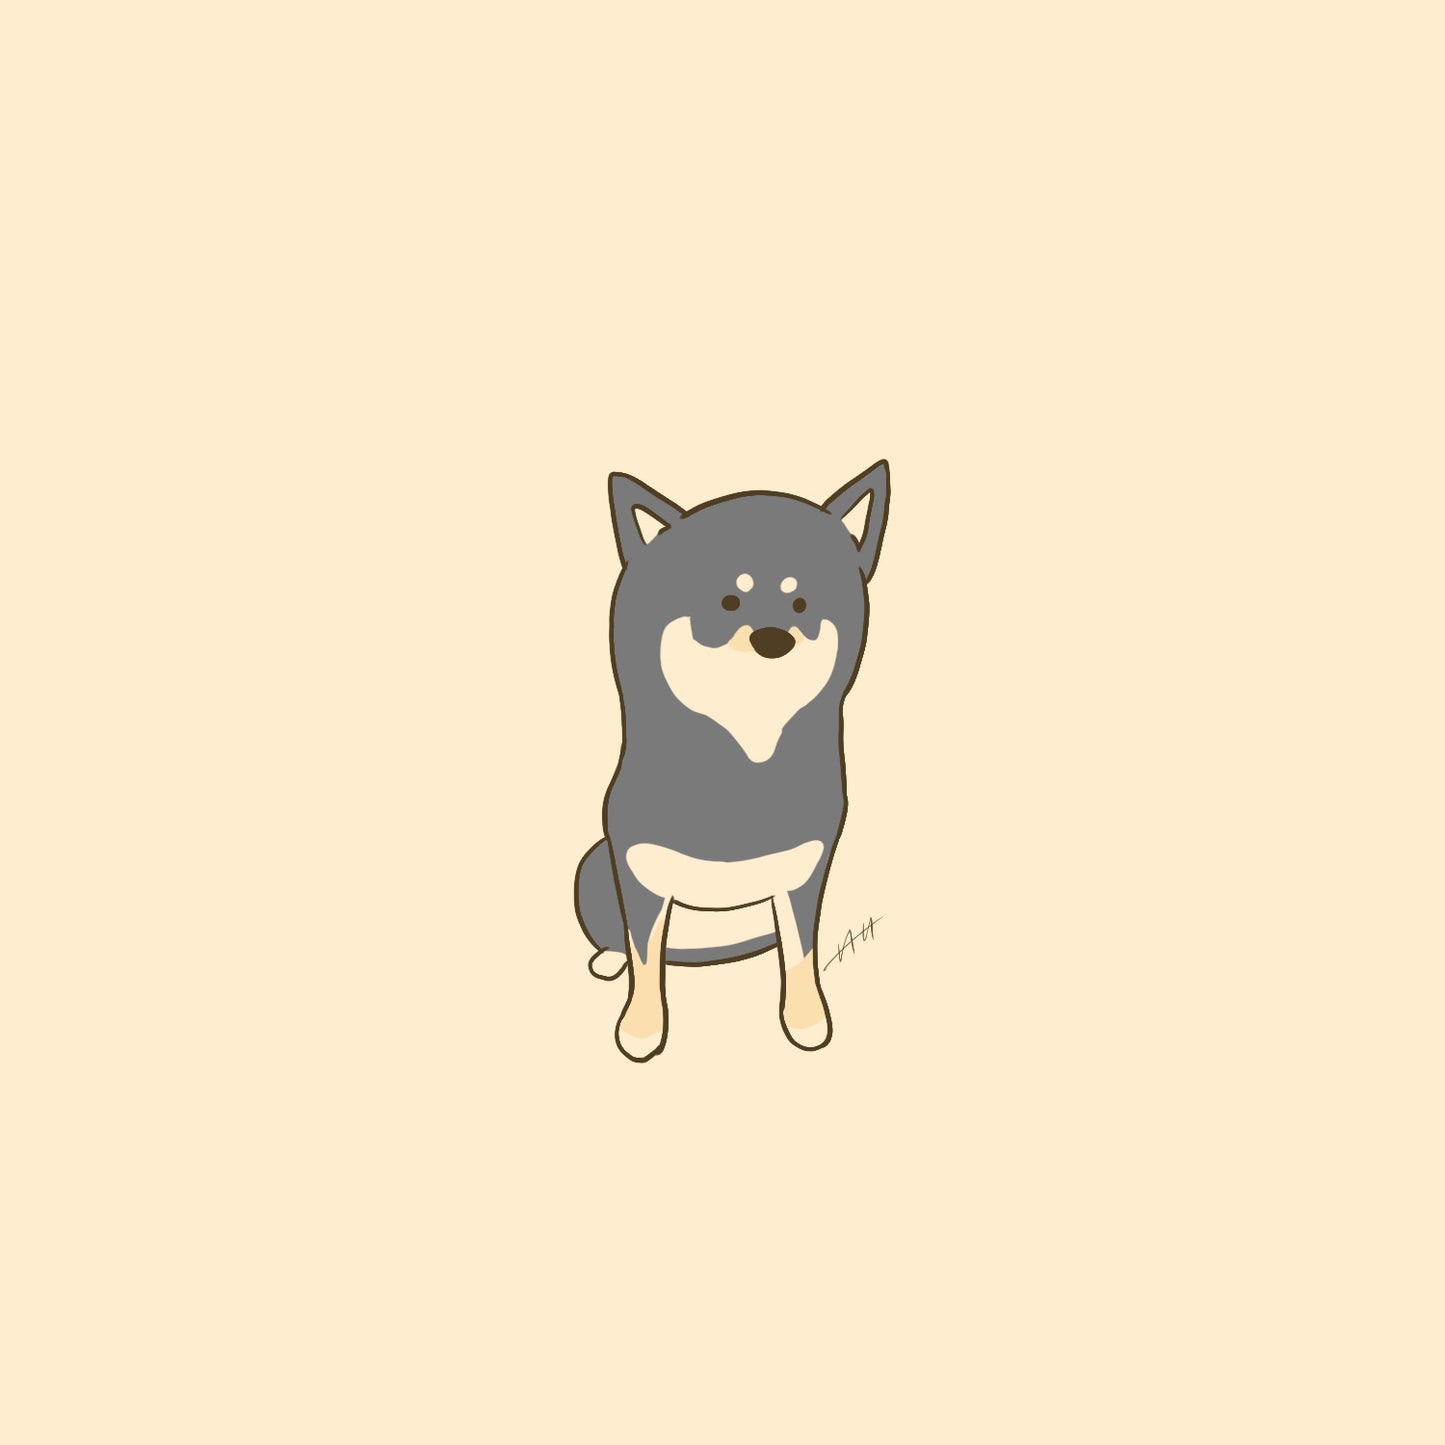 Pet dog illustration request